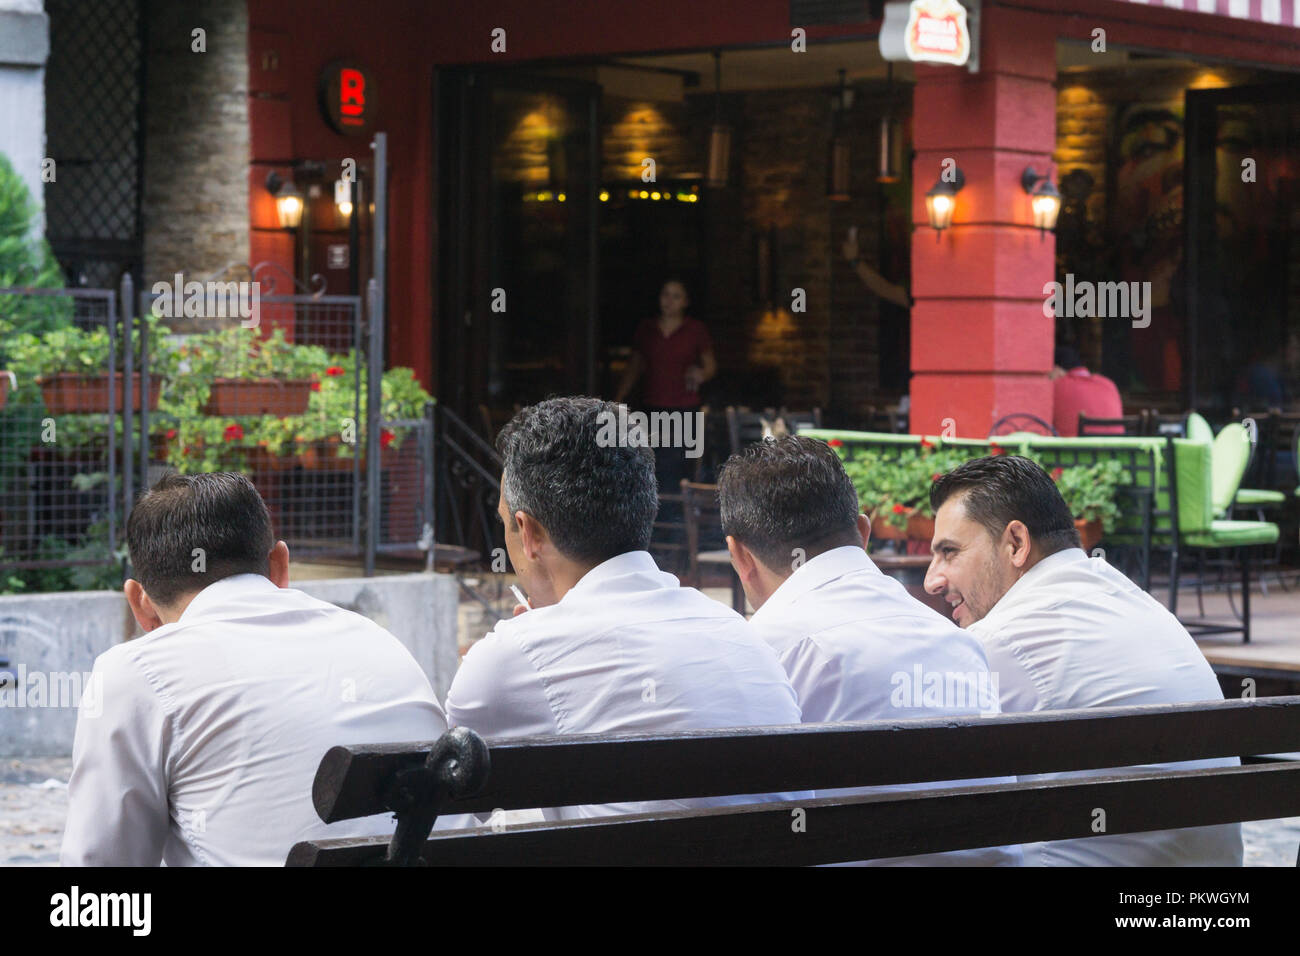 Belgrade Skadarlija street scene - restaurant musicians taking a short break. Serbia. Stock Photo